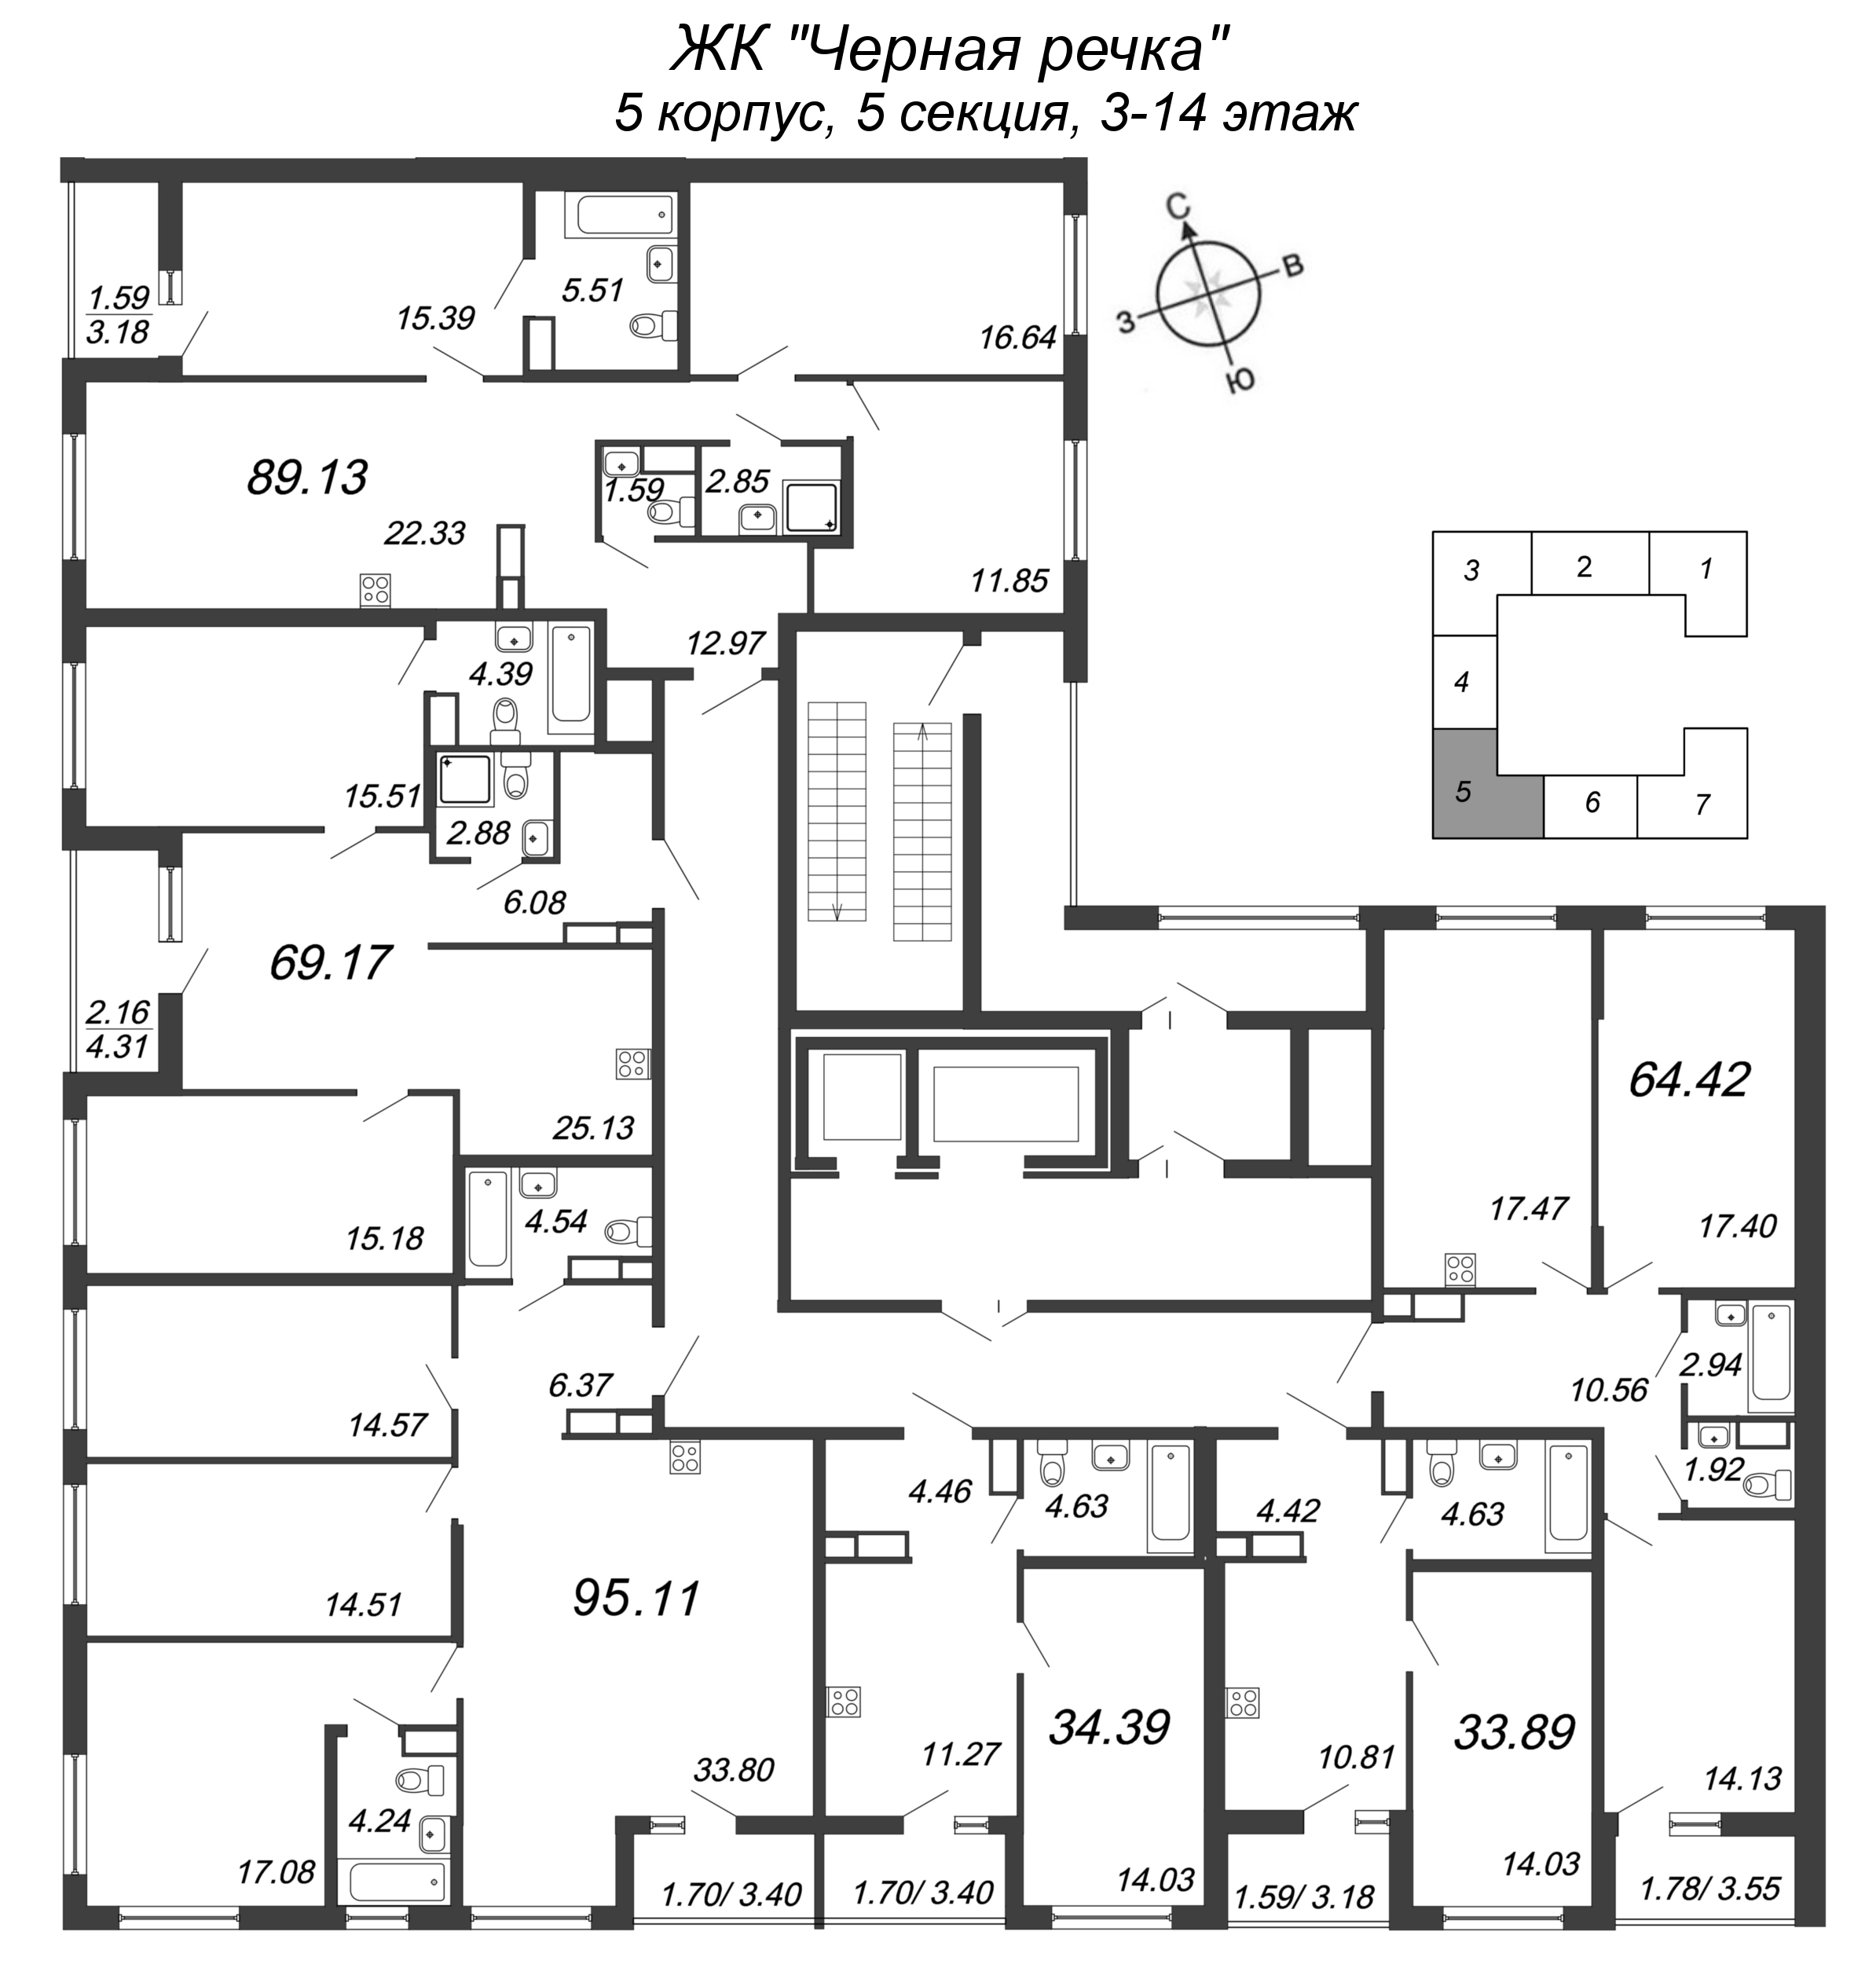 3-комнатная (Евро) квартира, 64.42 м² - планировка этажа